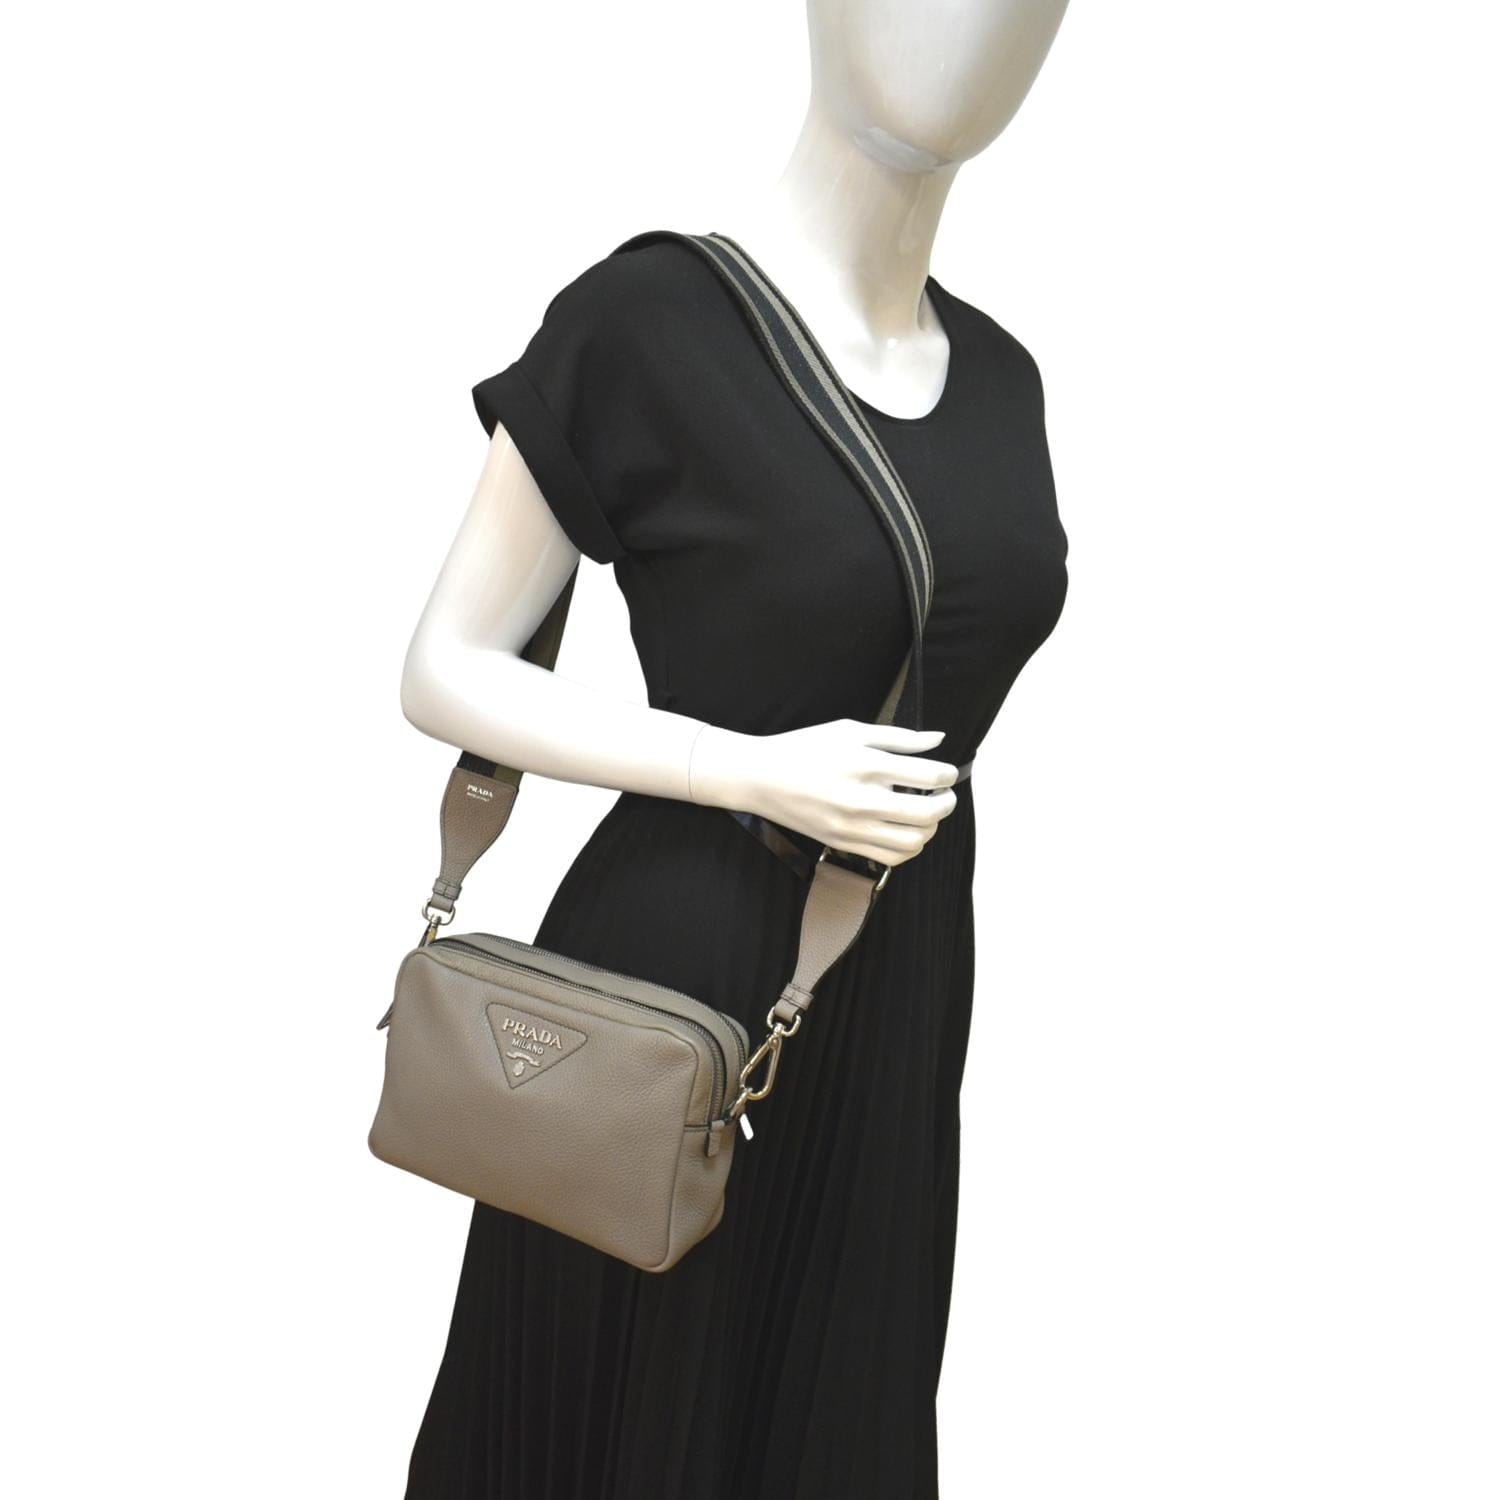 Auth PRADA Handbag Tote Shoulder Bag #8700 Black Patent leather | eBay